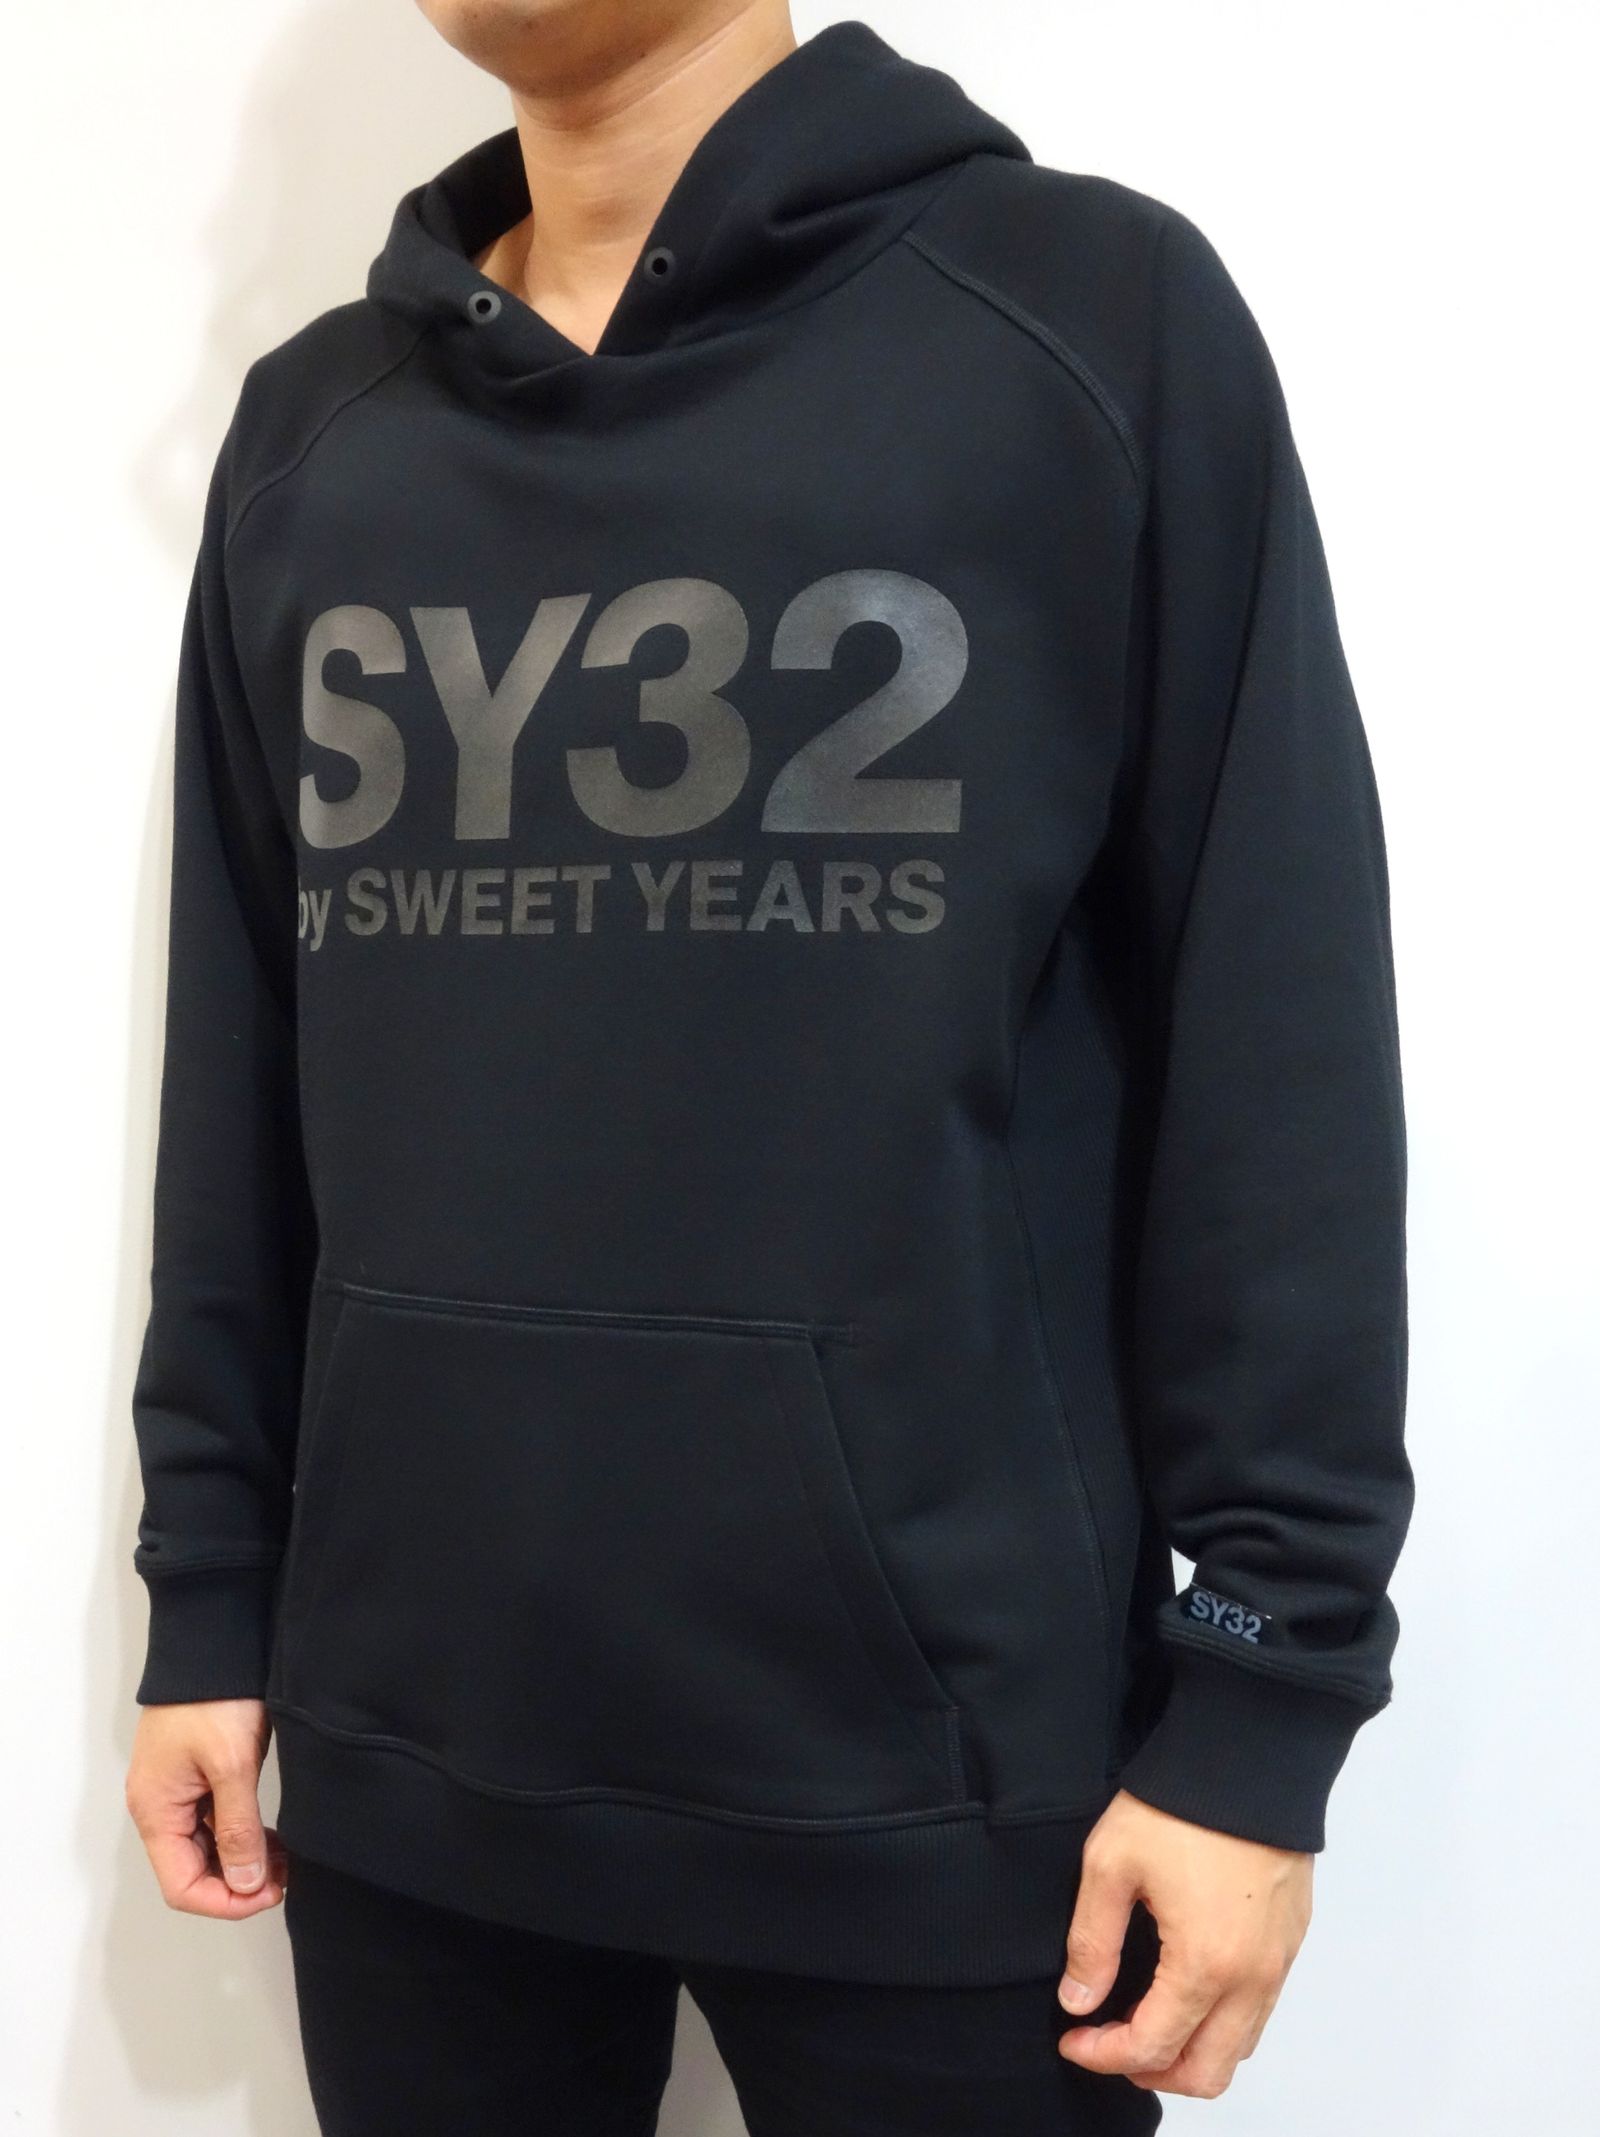 SY32 by SWEET YEARS - REFLECTOR PRT HOODIE / 10806 / パーカー | LUKE